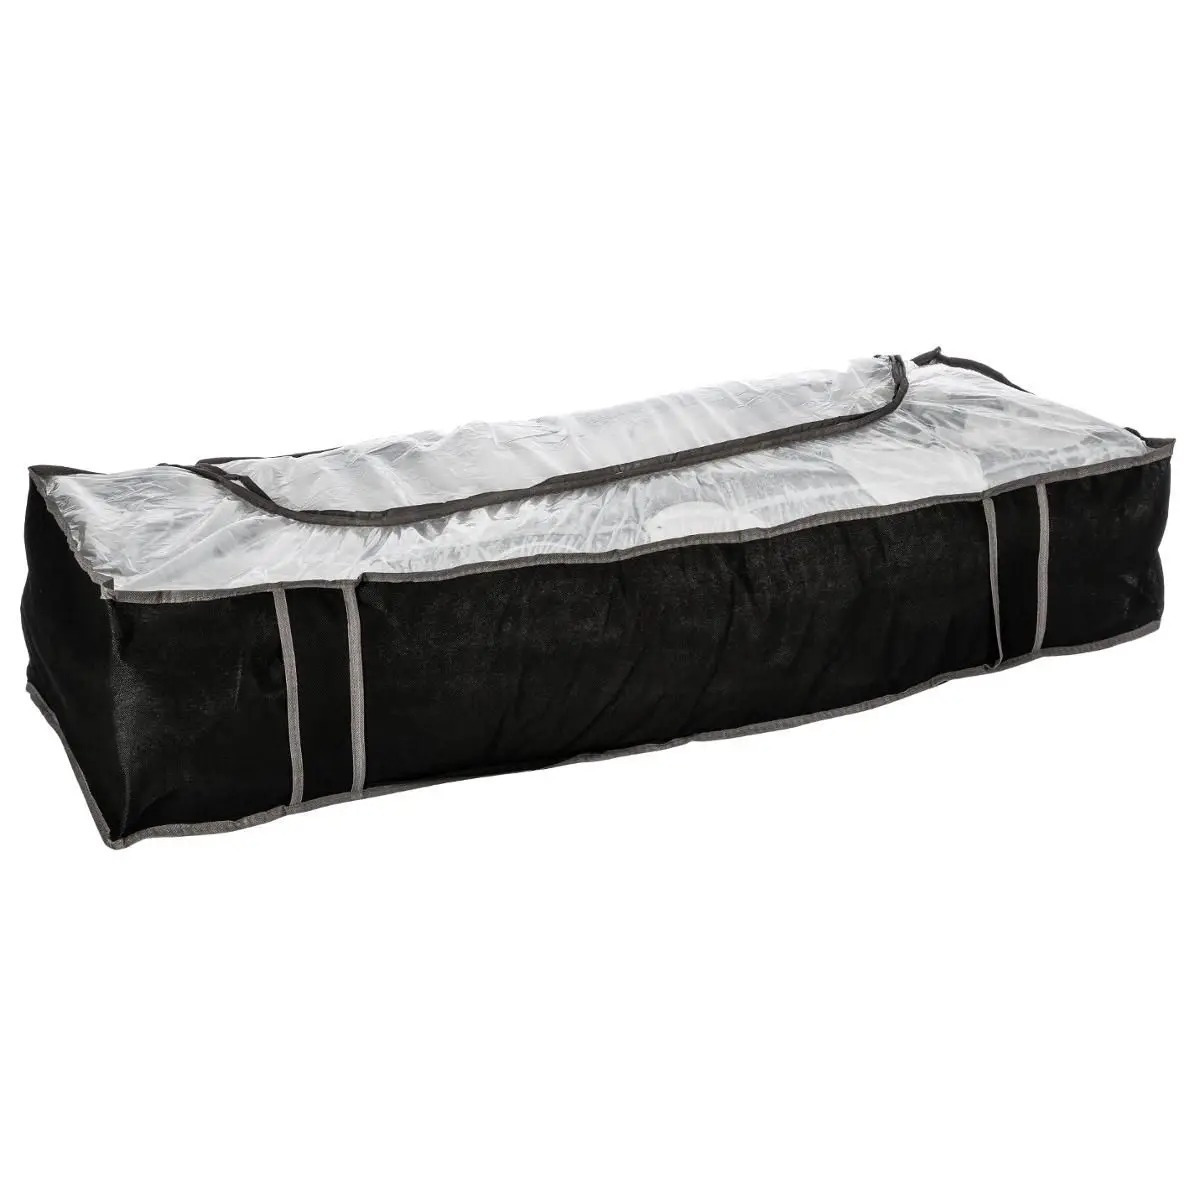 5Five Opberghoes-beschermhoes dekens en kussens zwart-grijs 100 x 45 x 20 cm